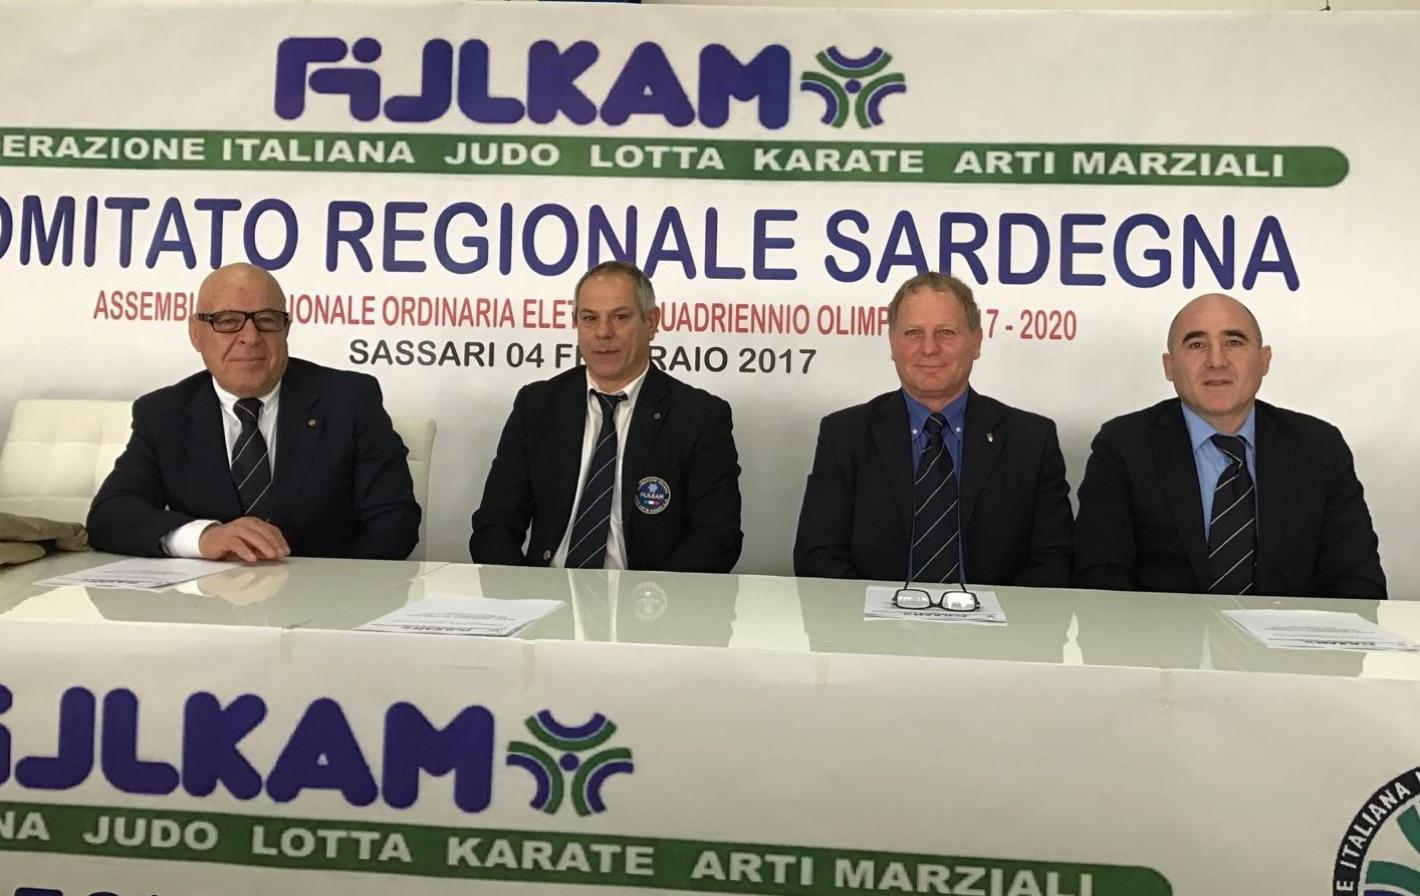 images/sardegna/Settore_Judo/2019/medium/FIJLKAM_Sardegna.jpg